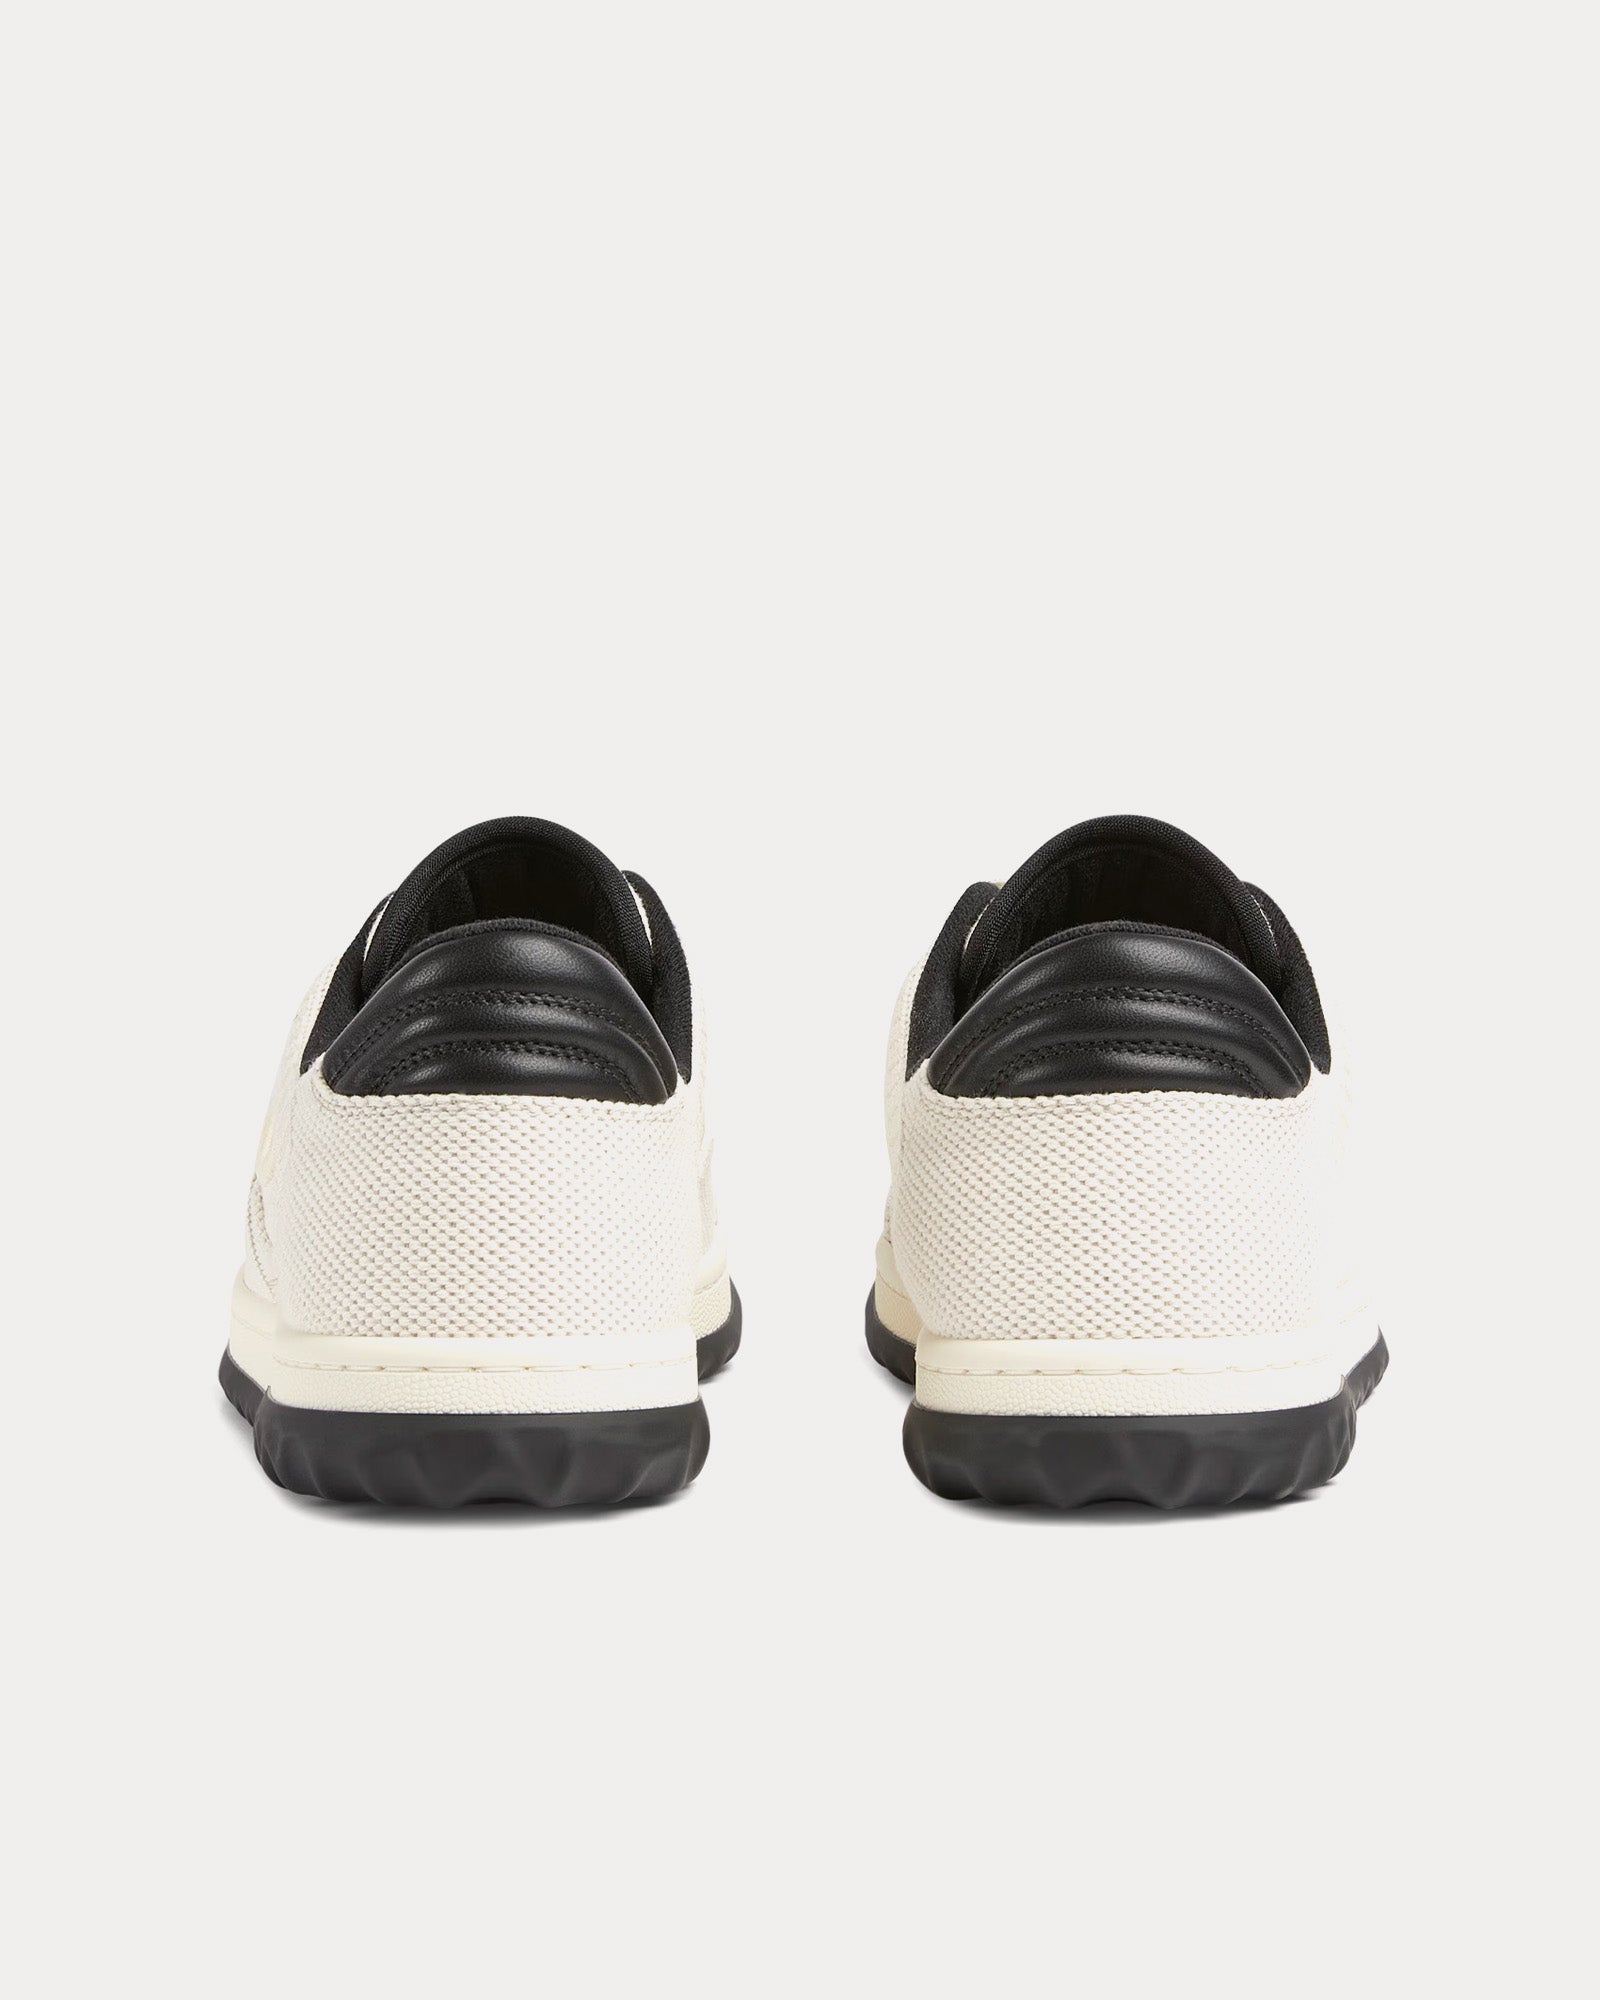 Gucci - MAC80 Canvas Beige / Black Low Top Sneakers